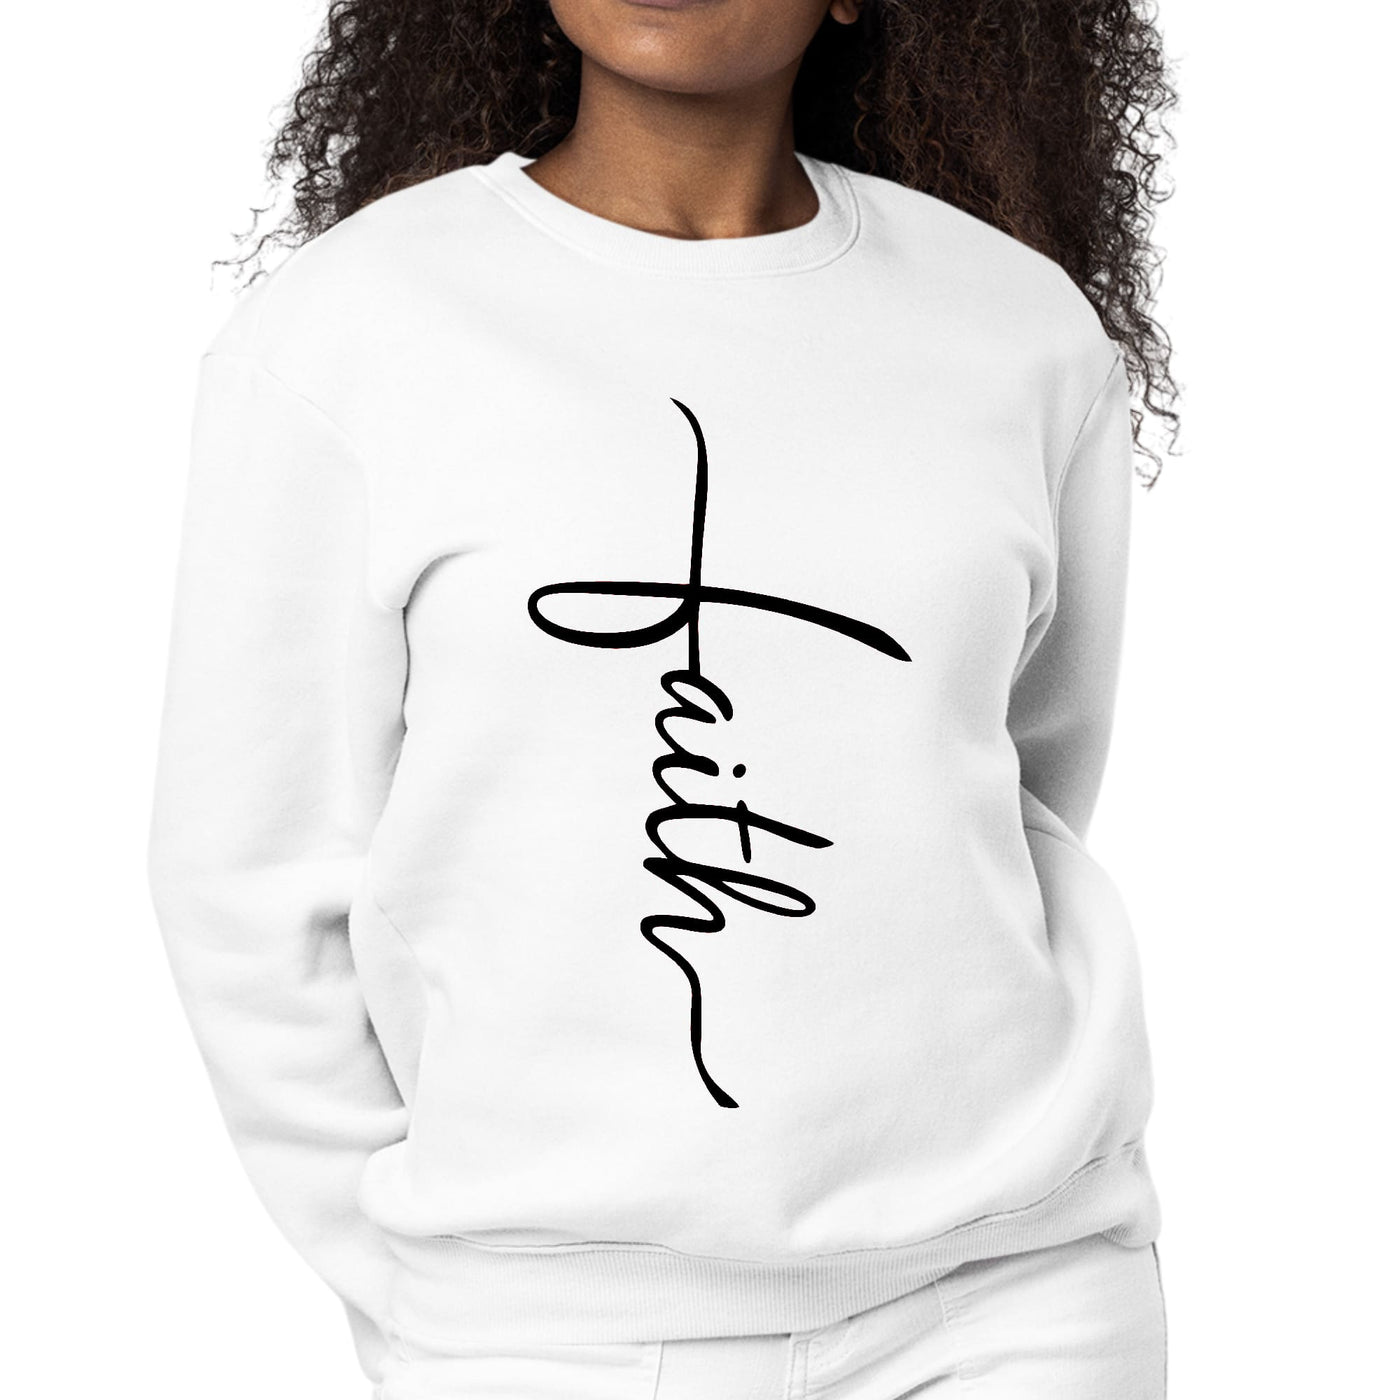 Womens Graphic Sweatshirt Faith Script Cross Black Illustration - Womens